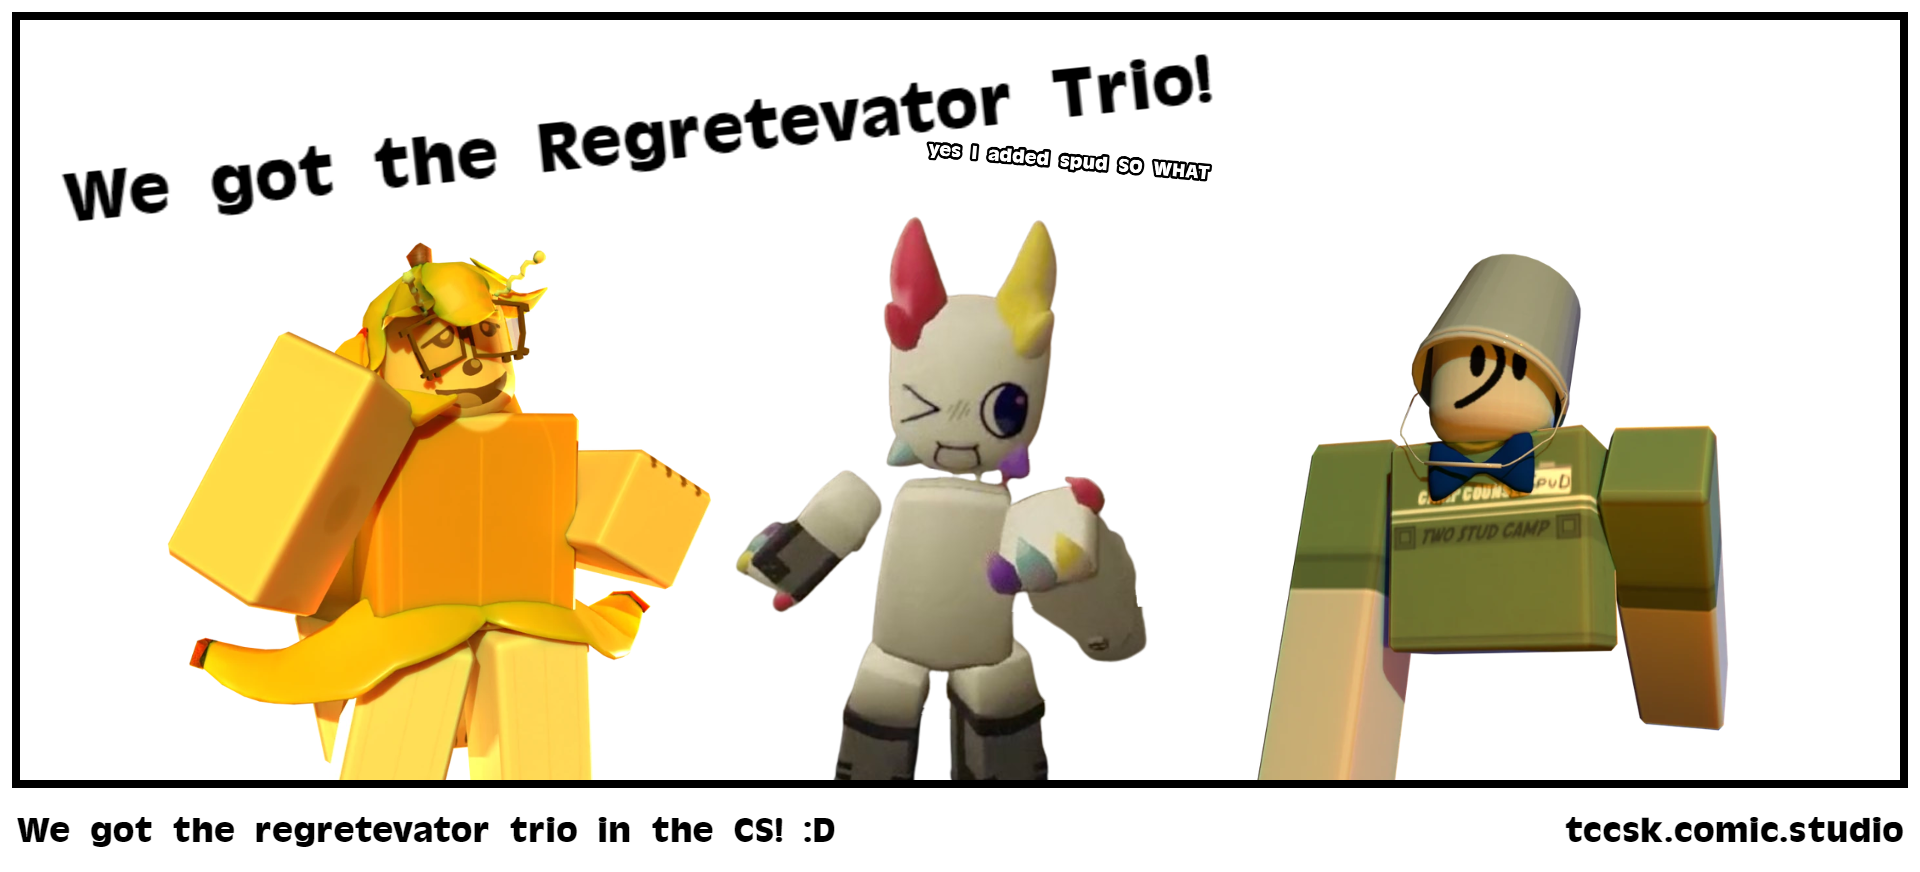 We got the regretevator trio in the CS! :D